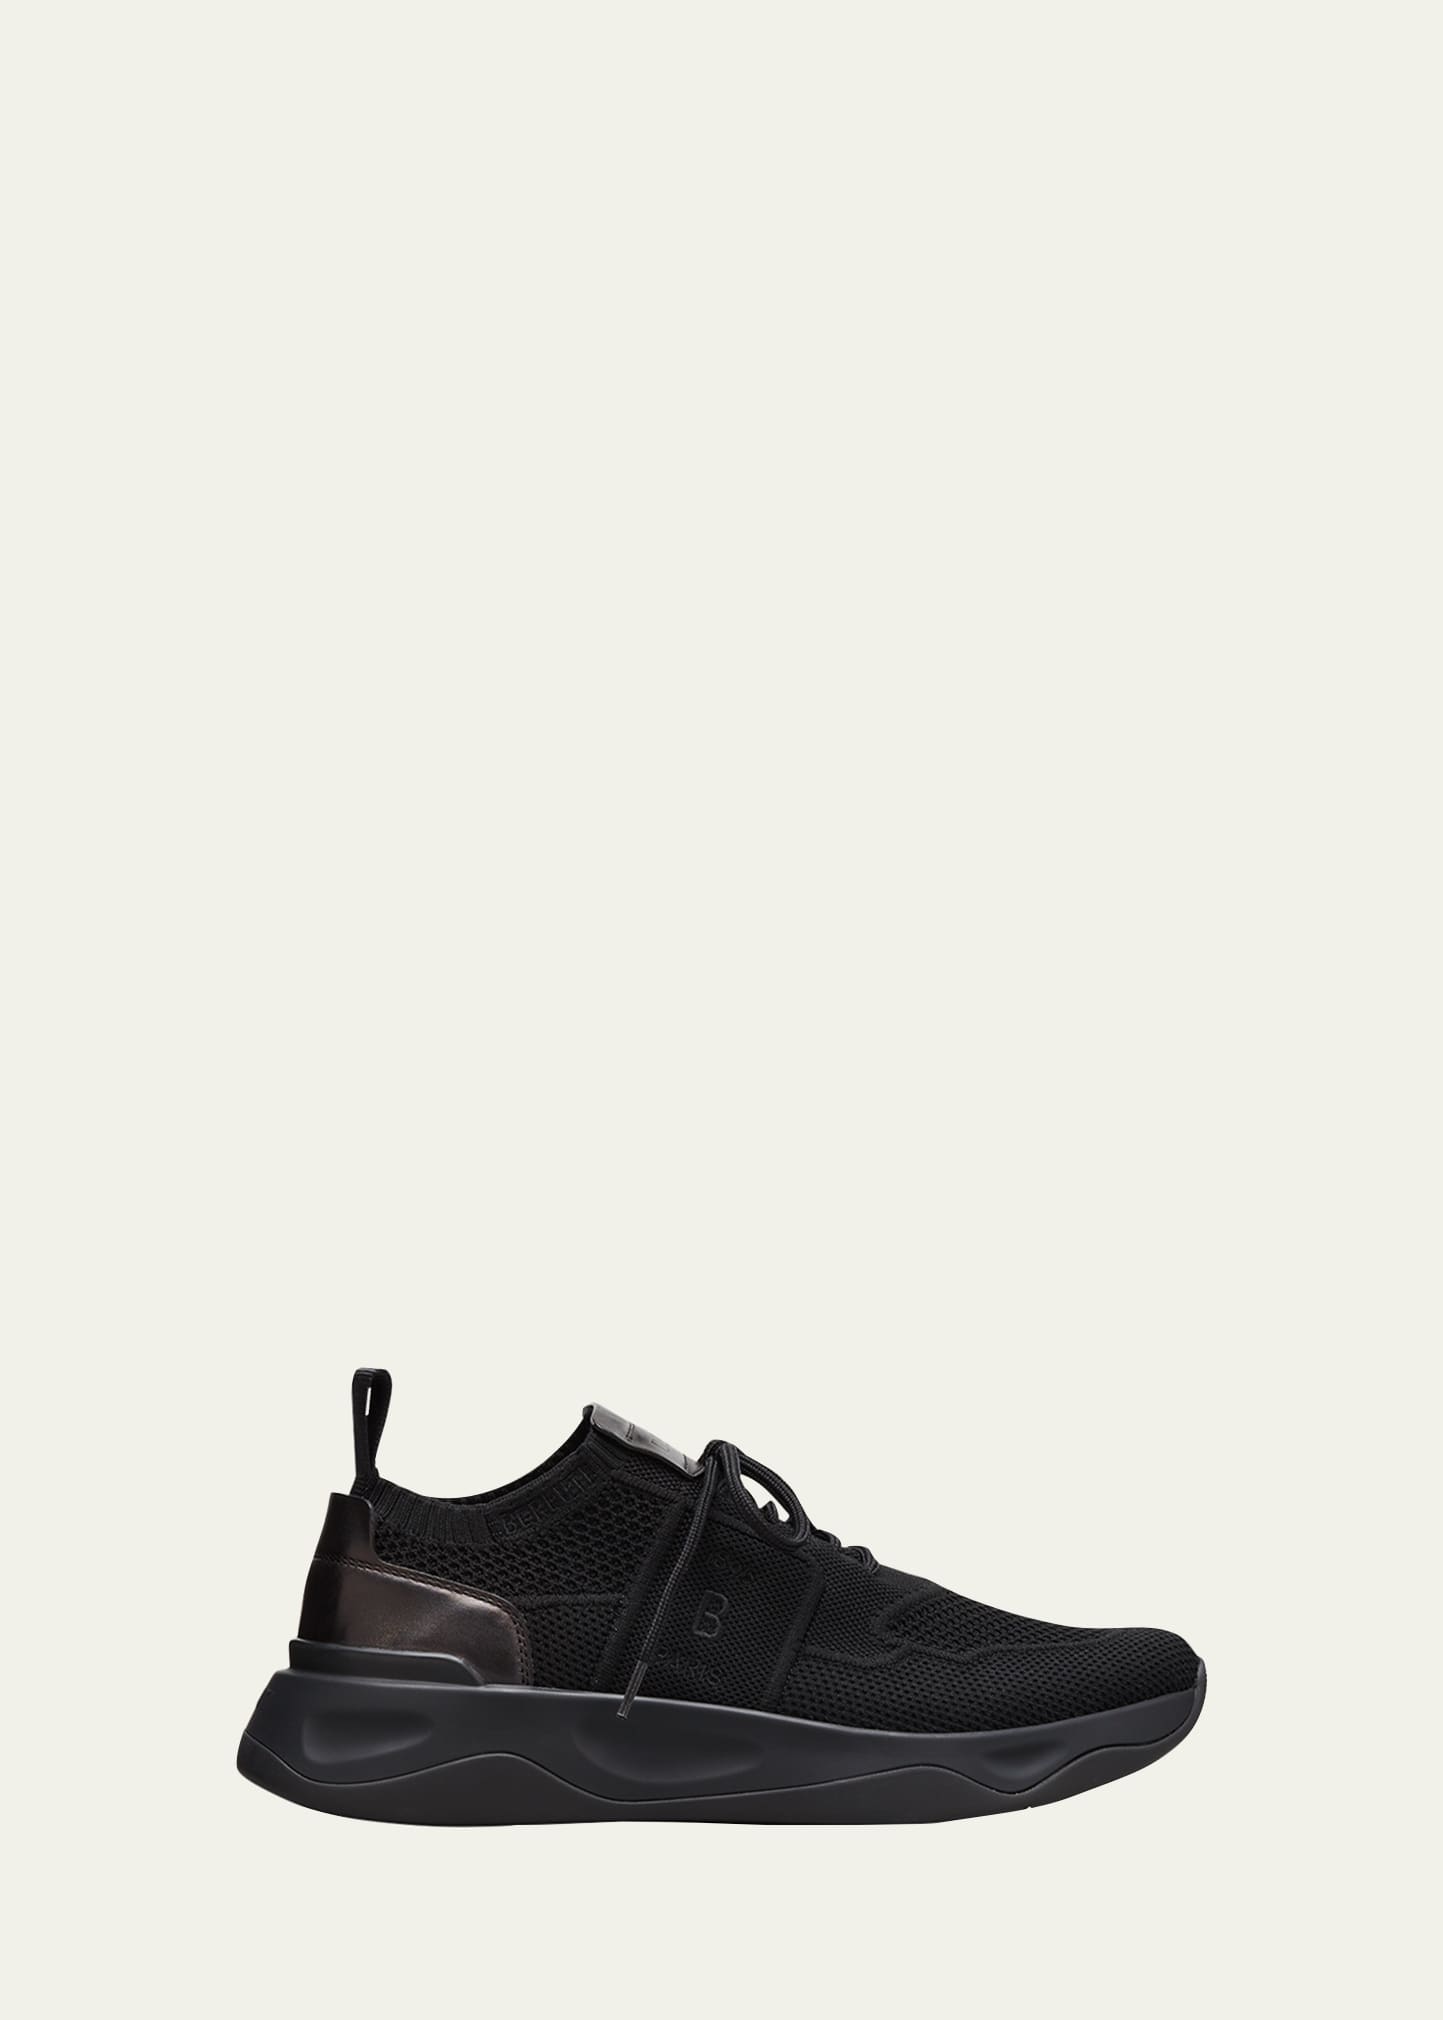 Berluti Men's Tonal Knit Runner Sneakers, Black